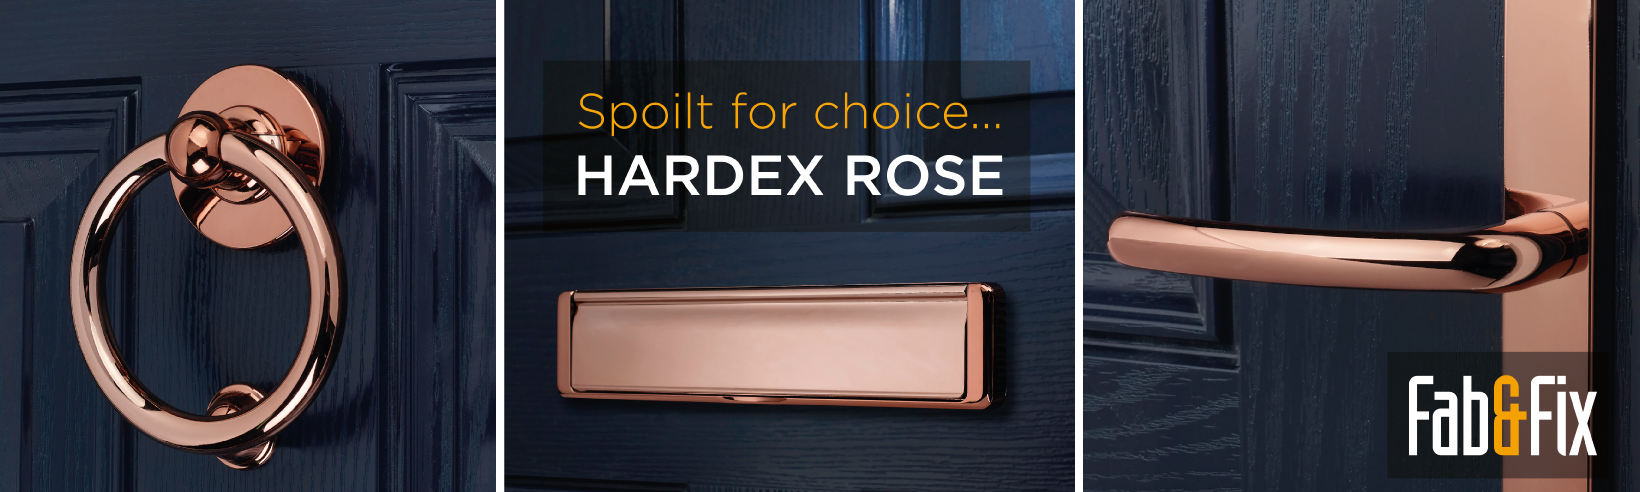 Hardex-Rose-1640x492.jpg